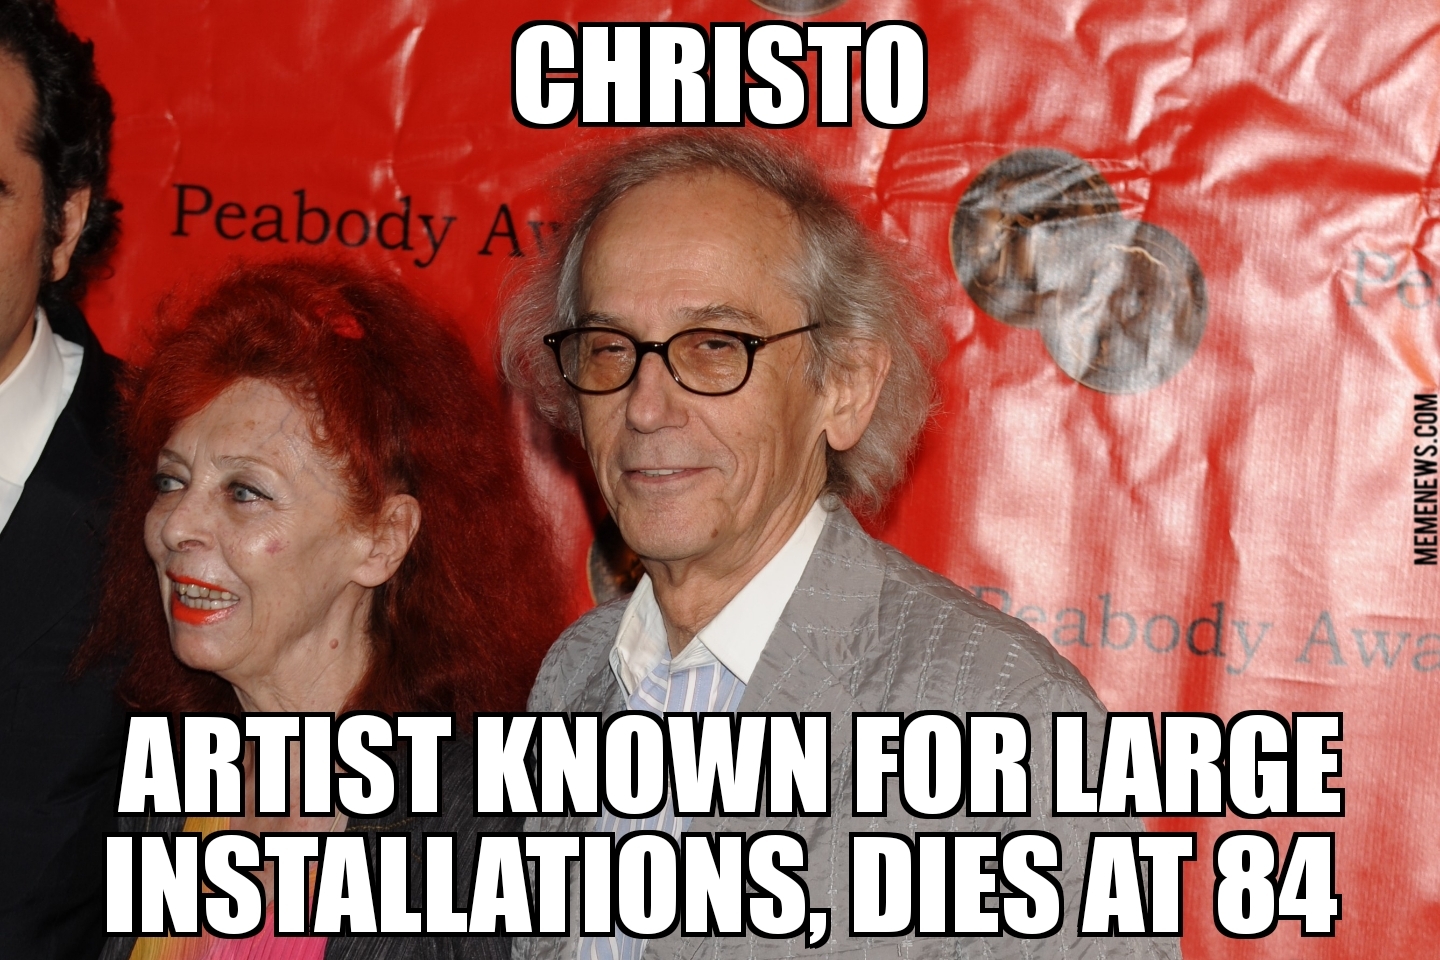 Christo dies